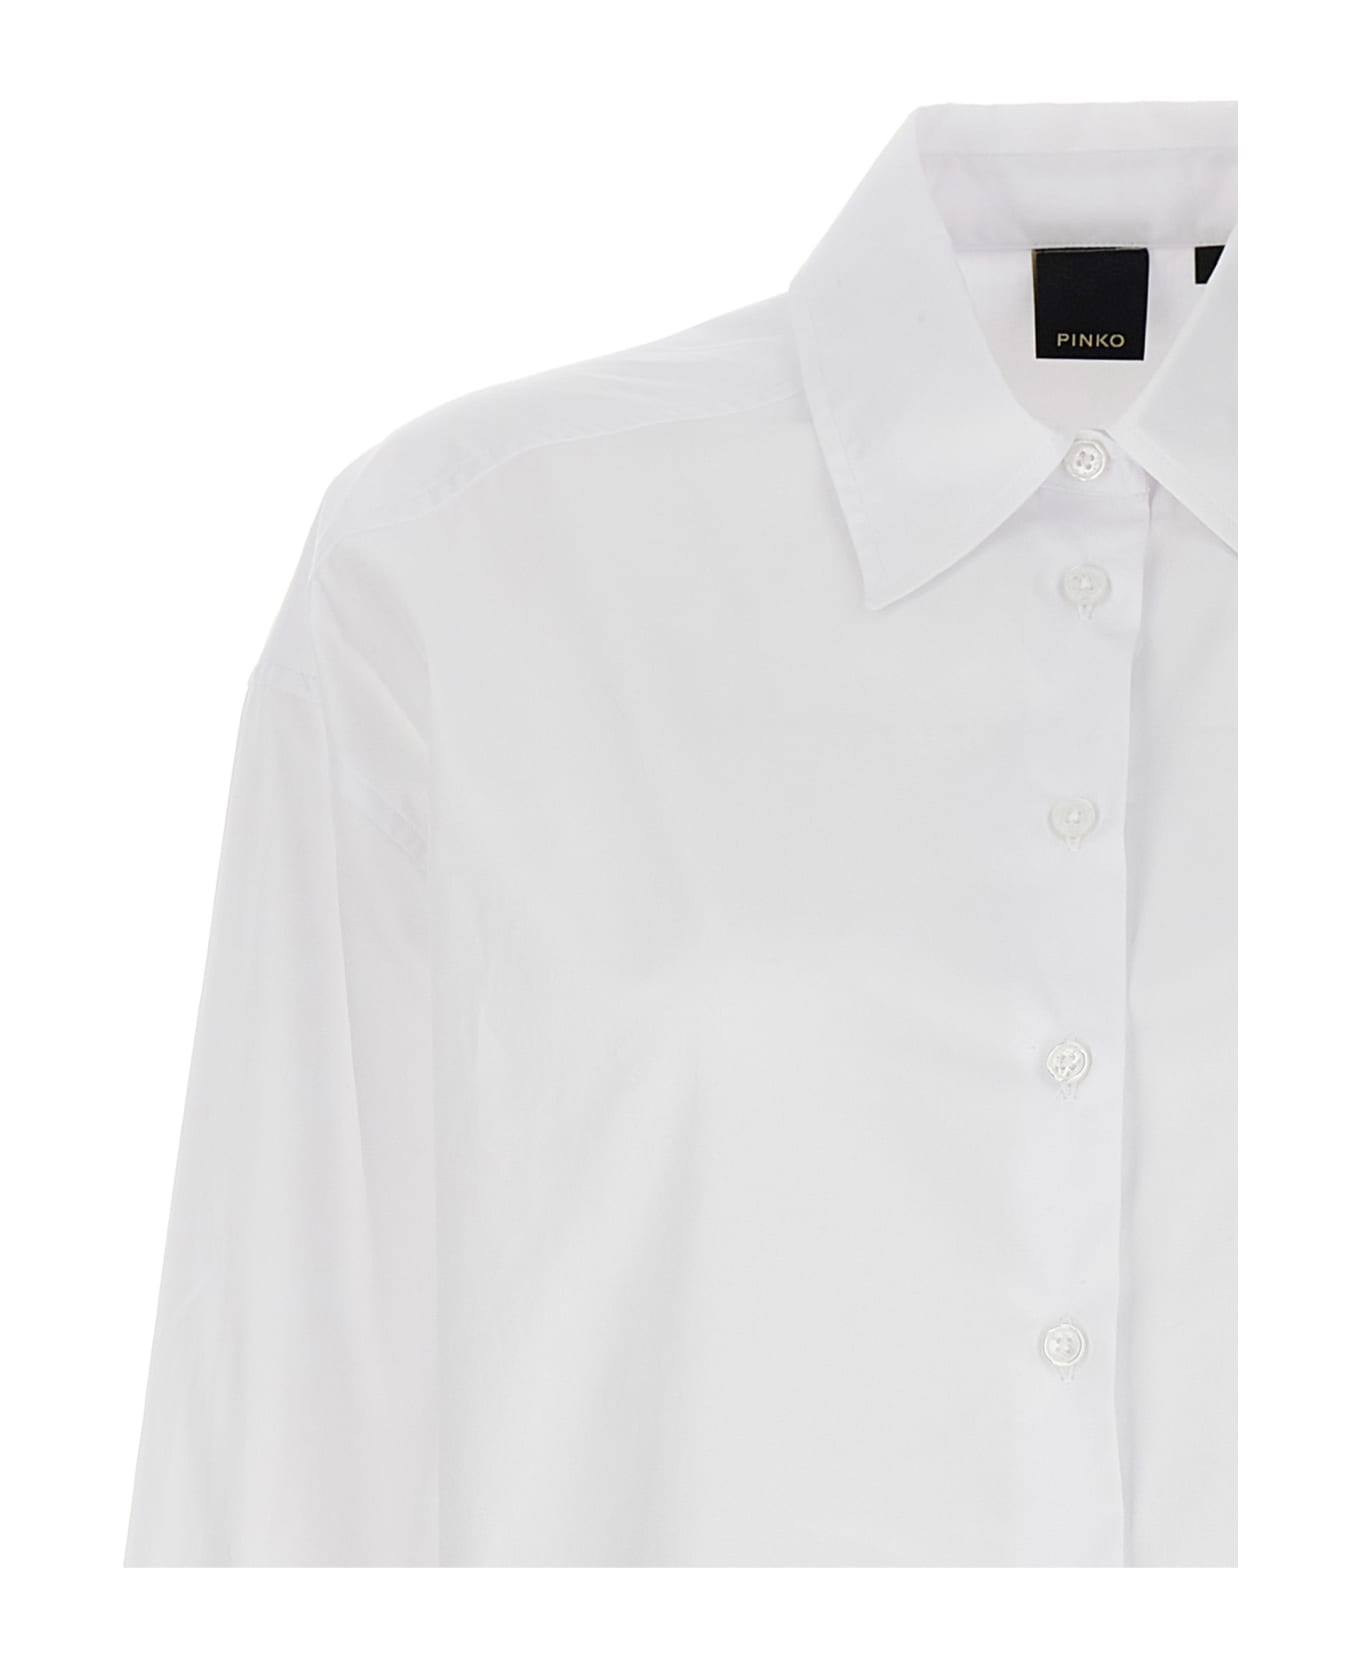 Pinko Eden Cotton Poplin Shirt - White シャツ